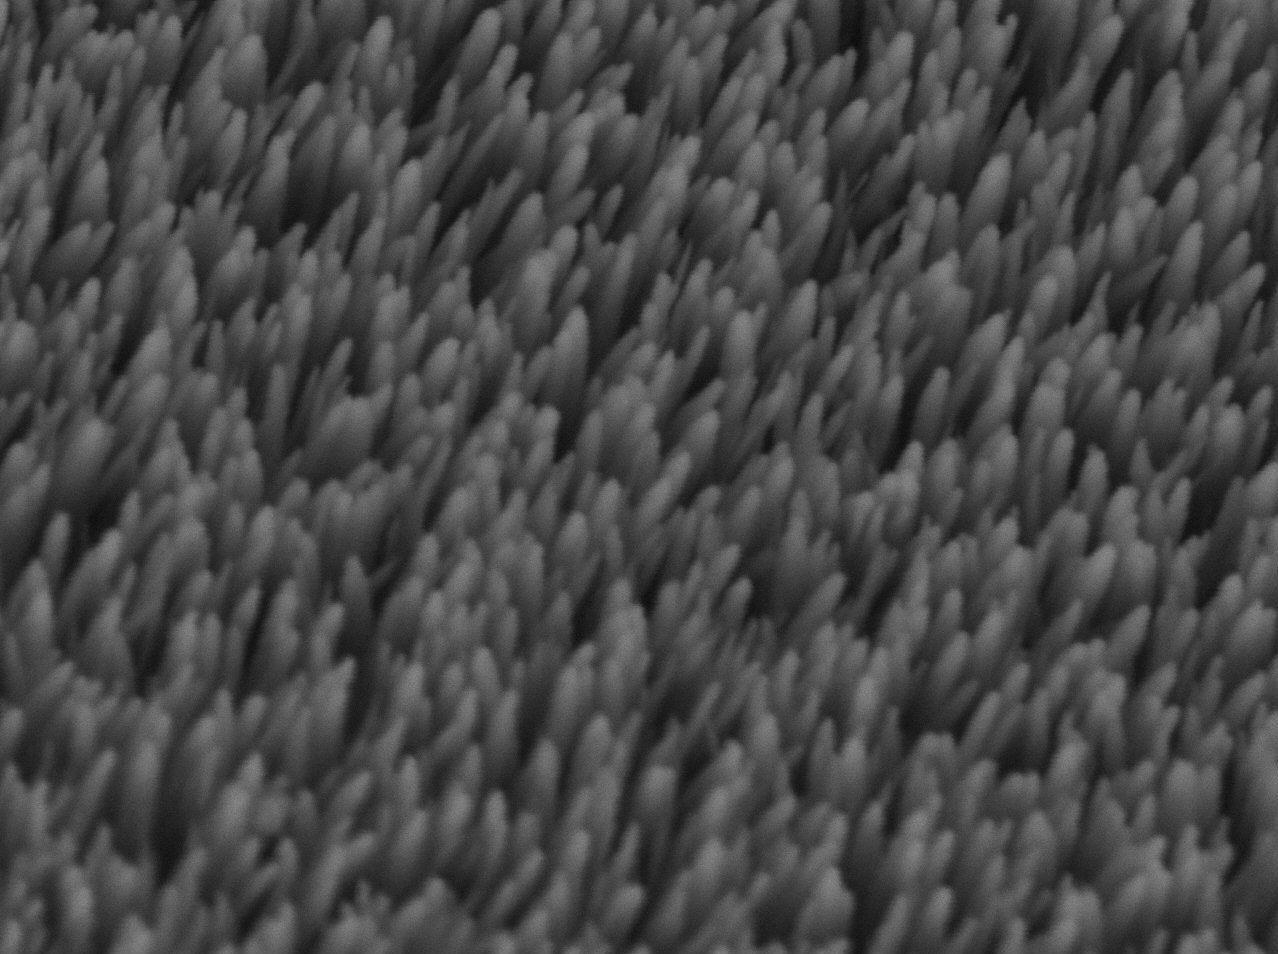 Functional Materials, ZnO nanorods